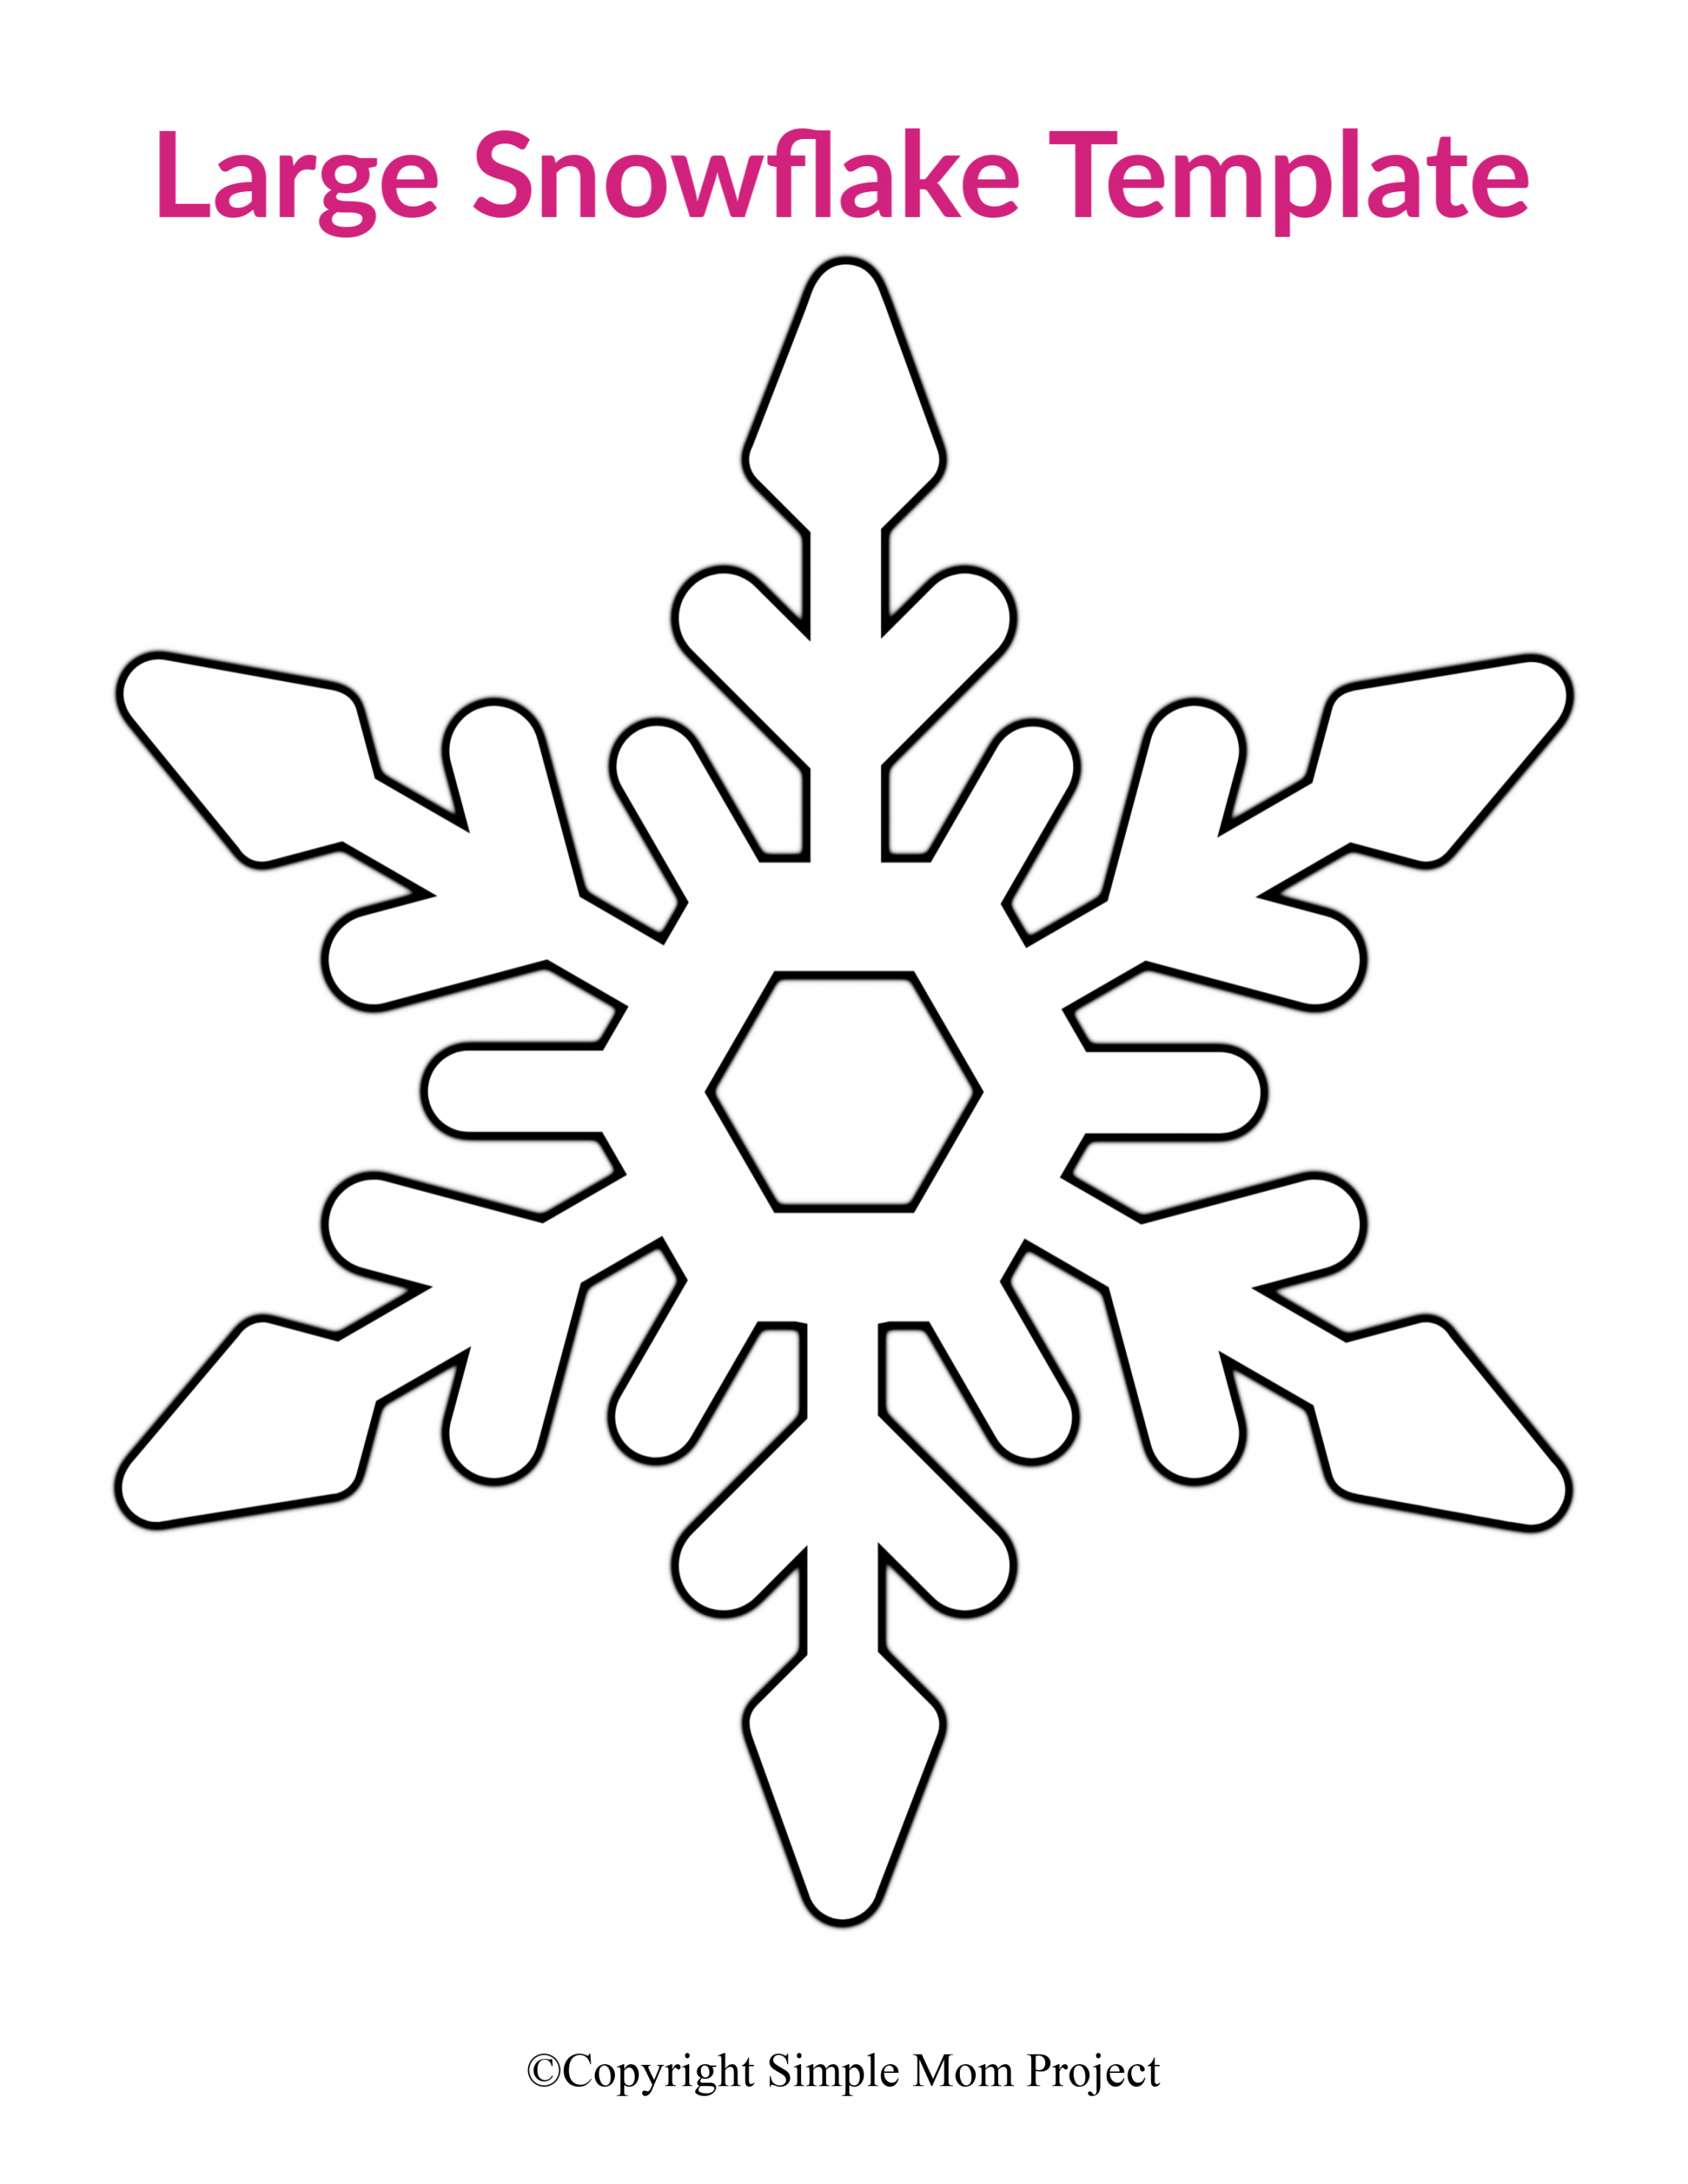 Free Printable Large Snowflake Templates - Simple Mom Project - FREE Printables - Snowflakes Template